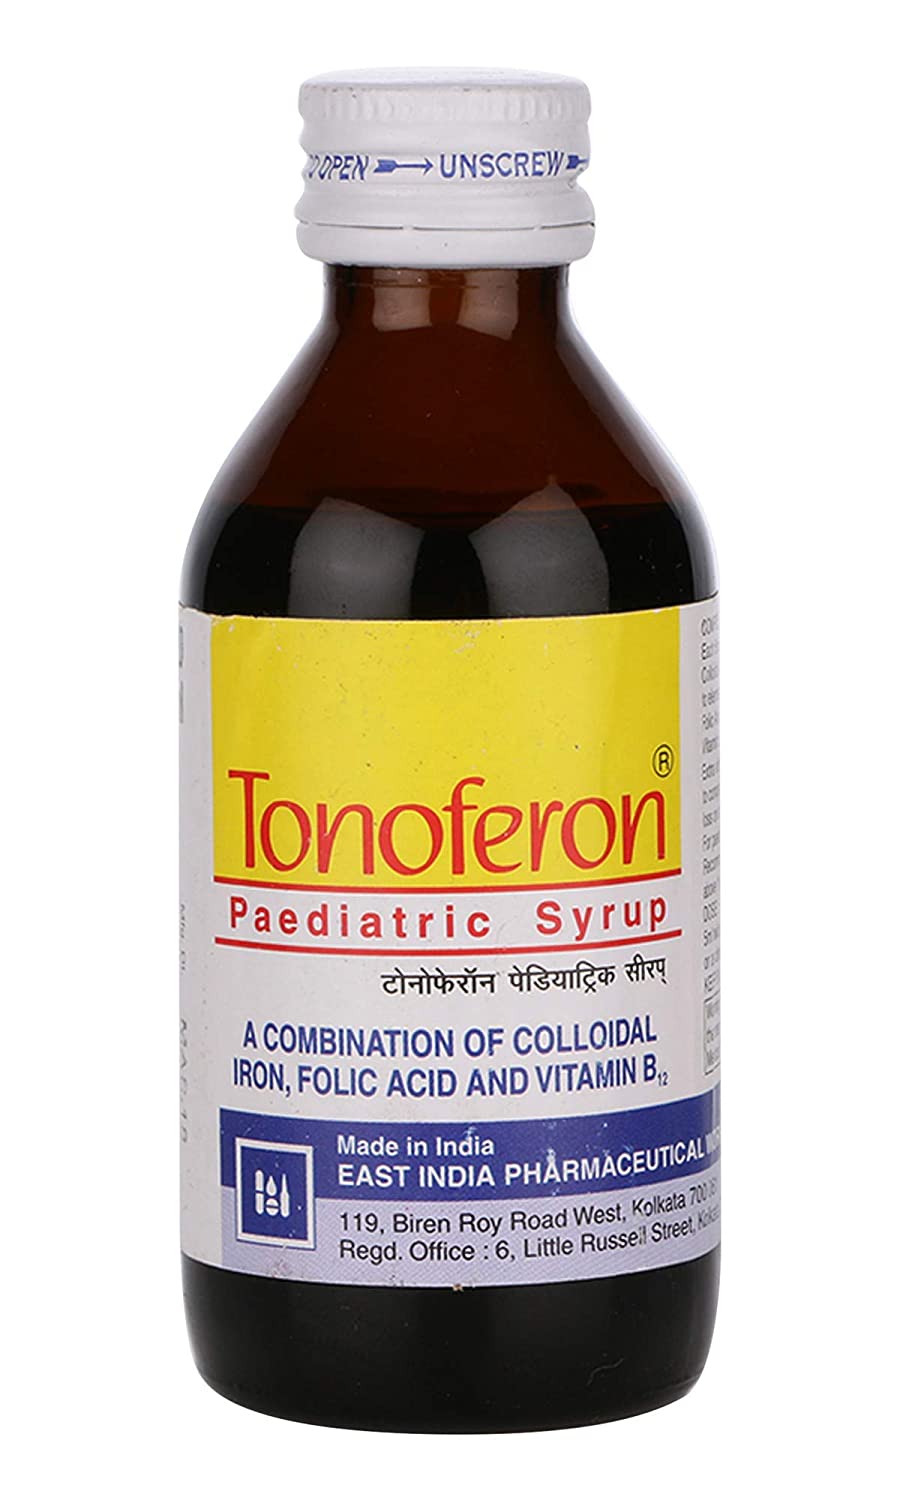 tonoferon paediatric syrup